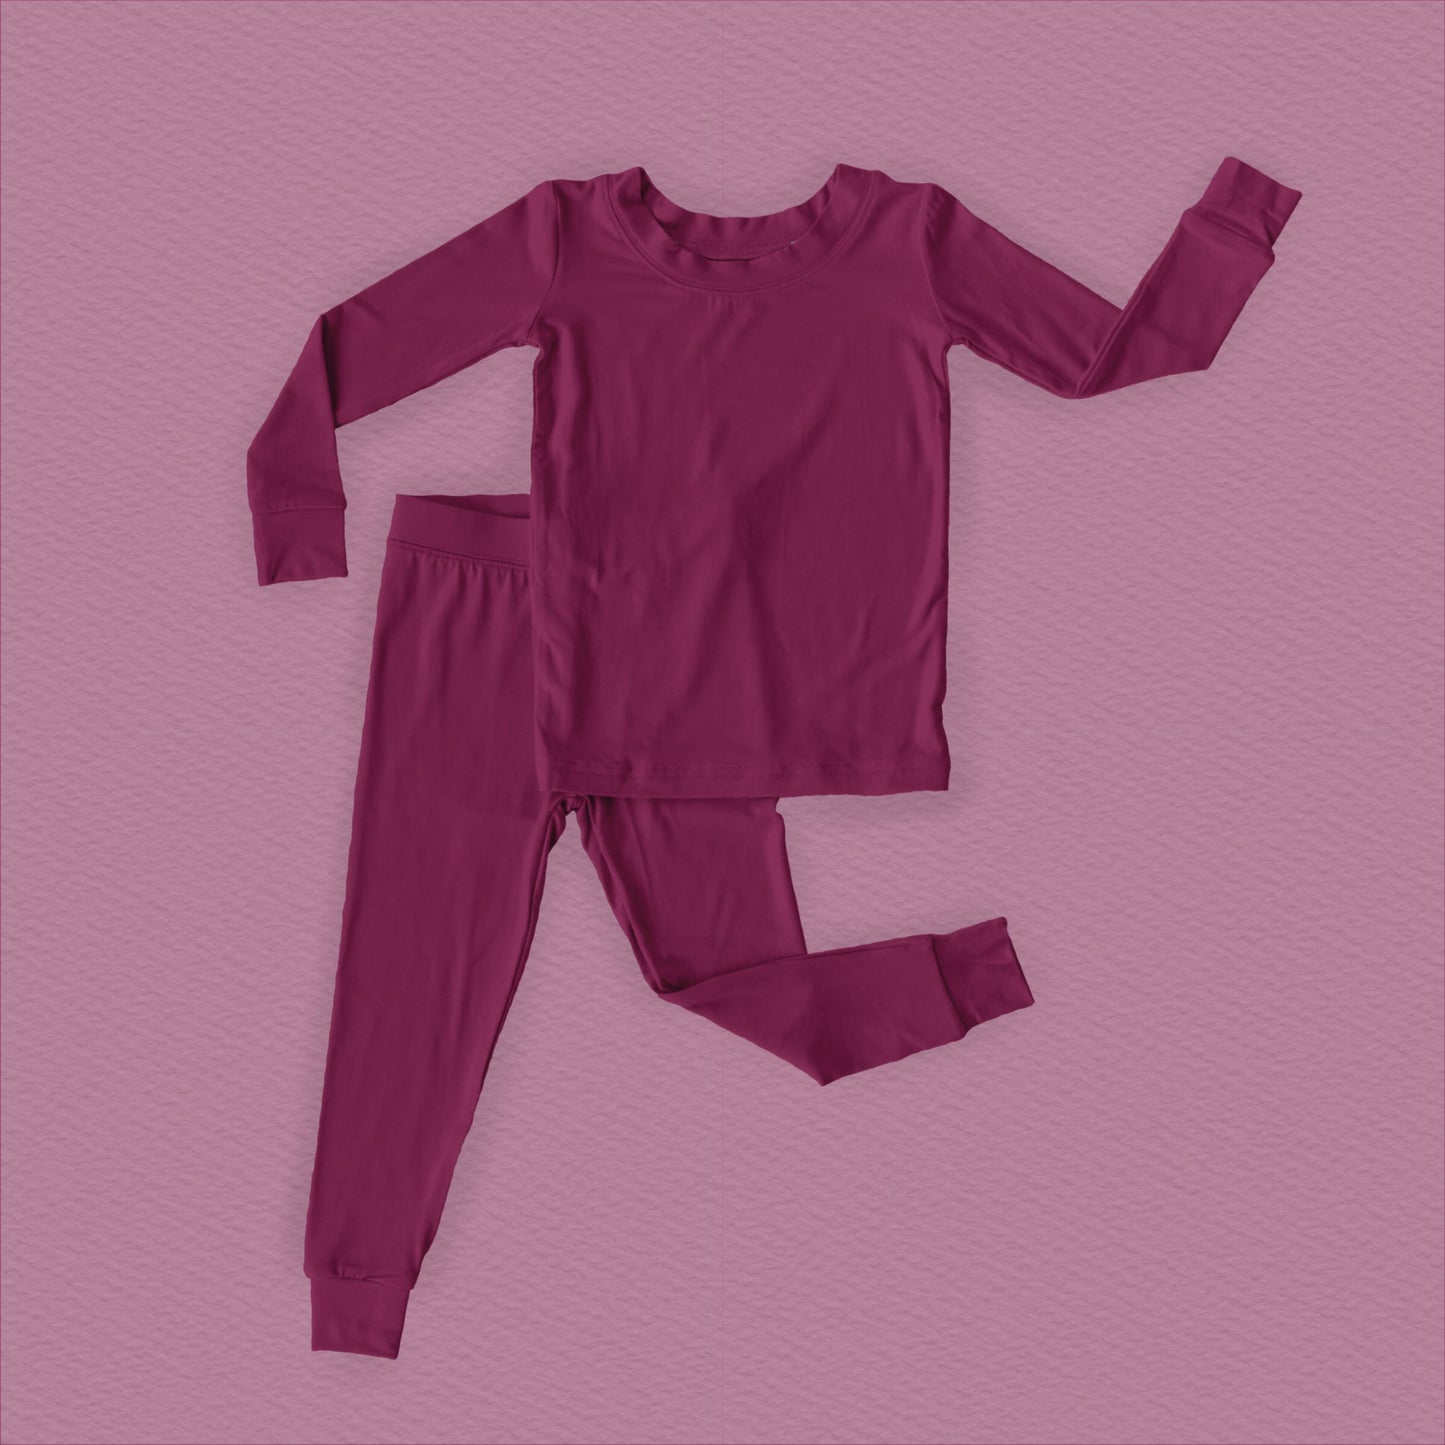 Basic Bamboo 2pc Set Pajamas - It's Magenta, B!tch